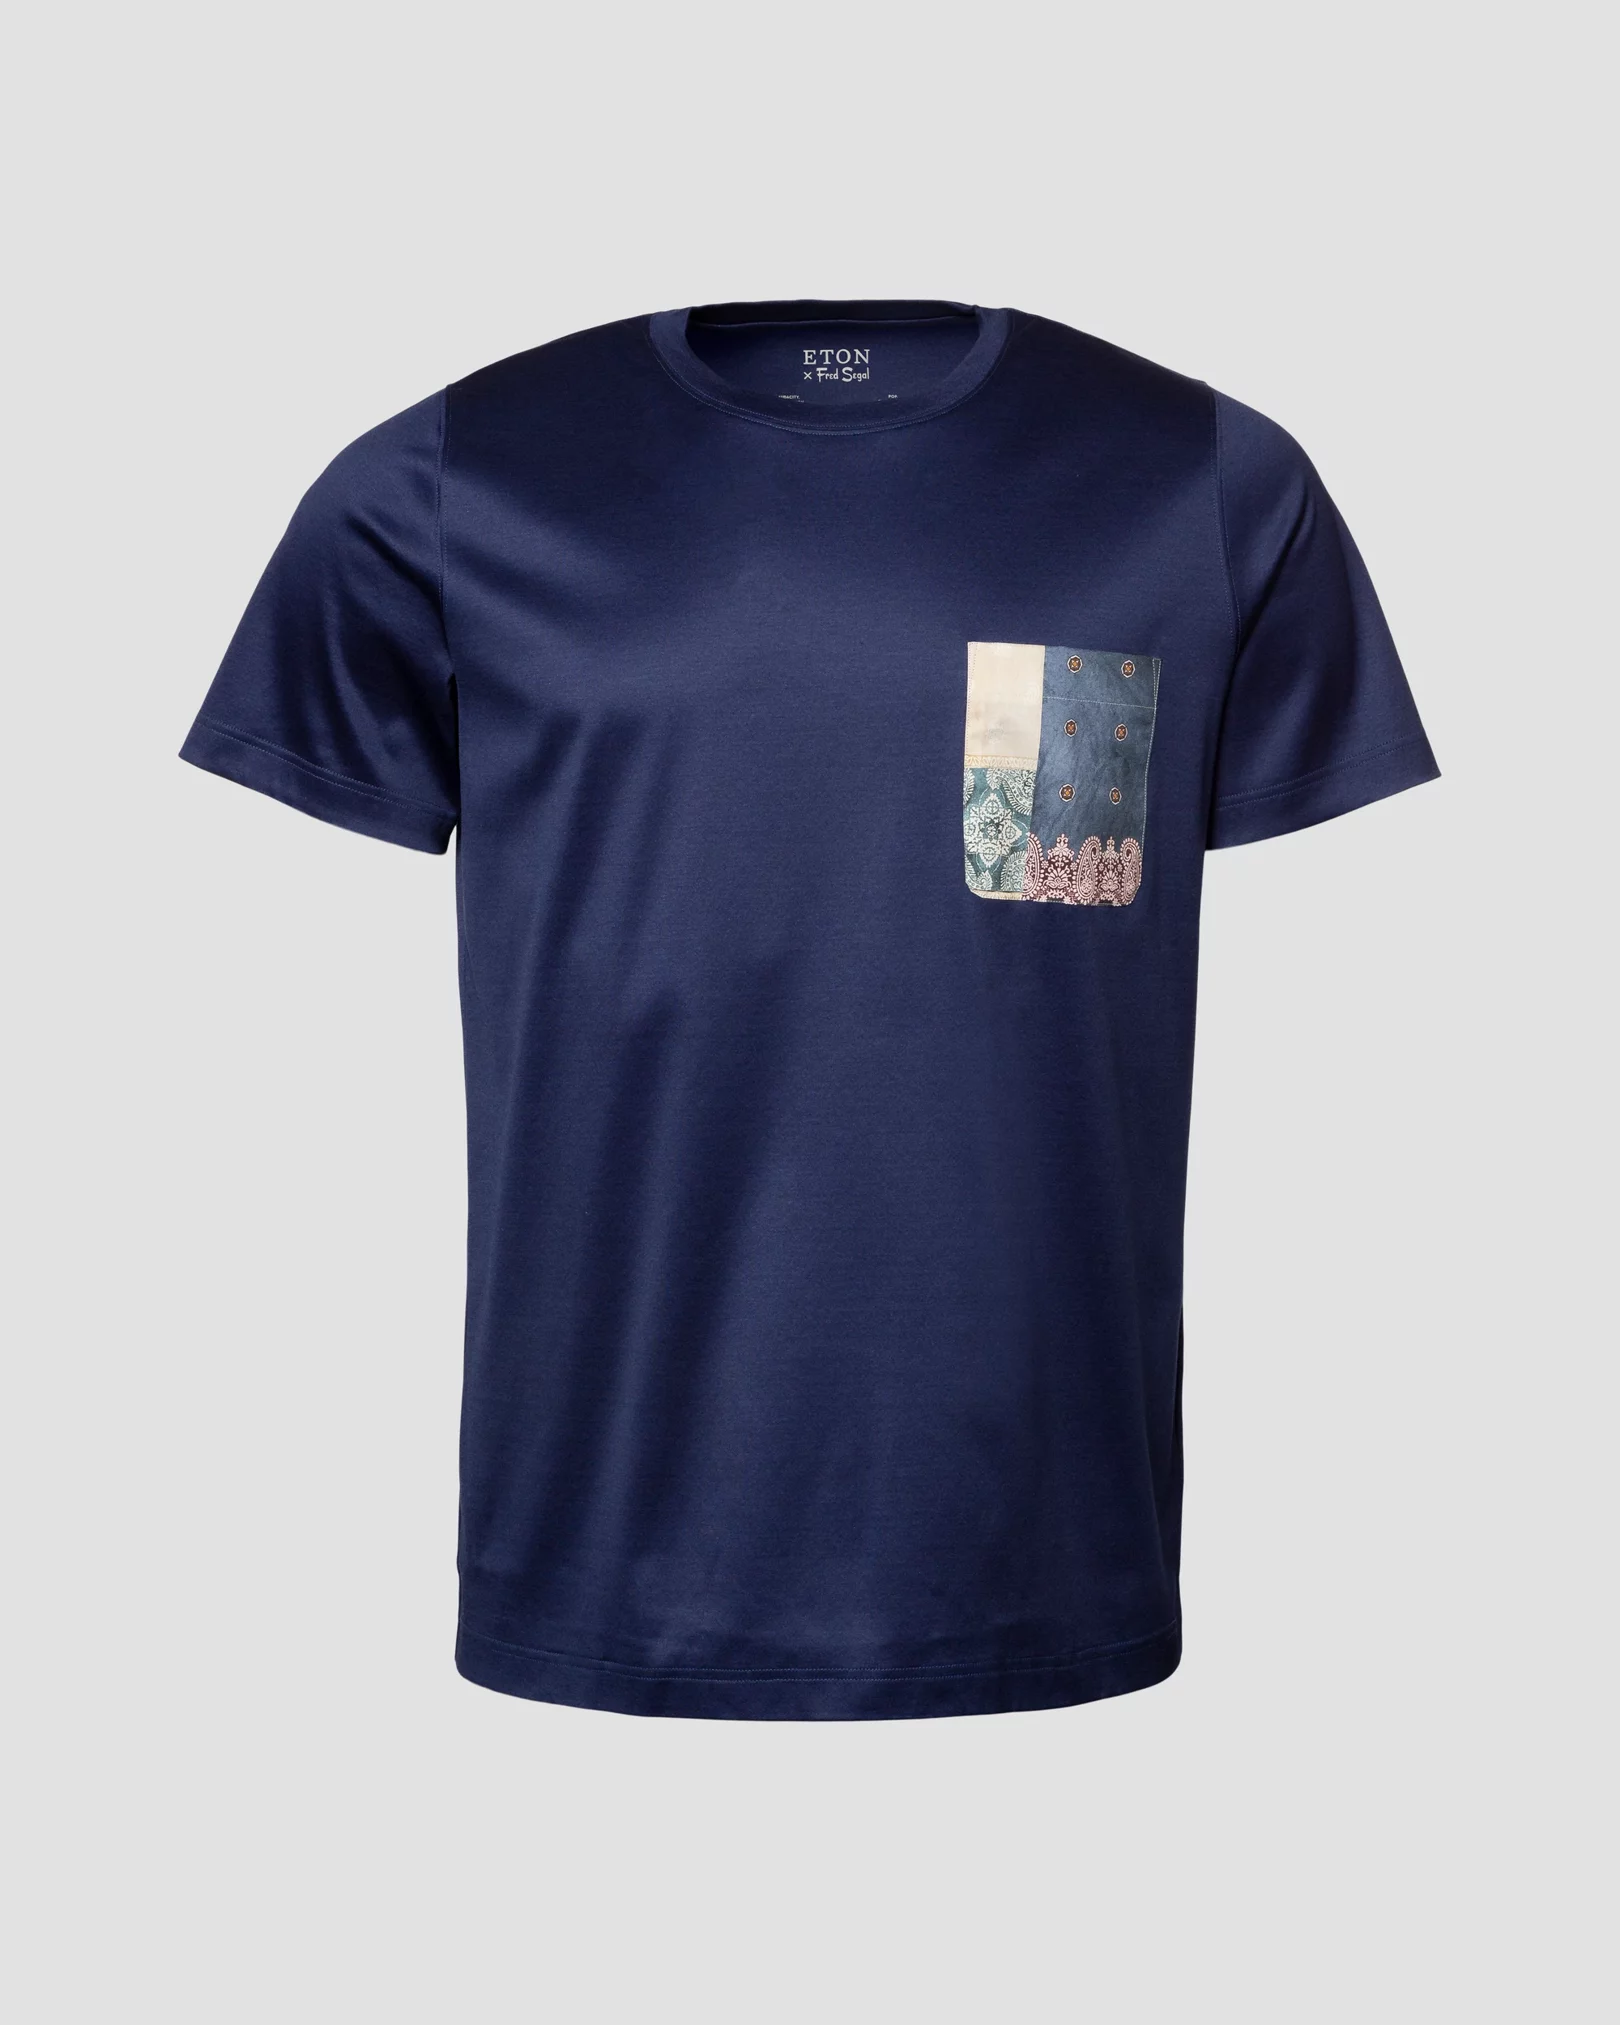 Eton - navy blue jersey t shirt short sleeve